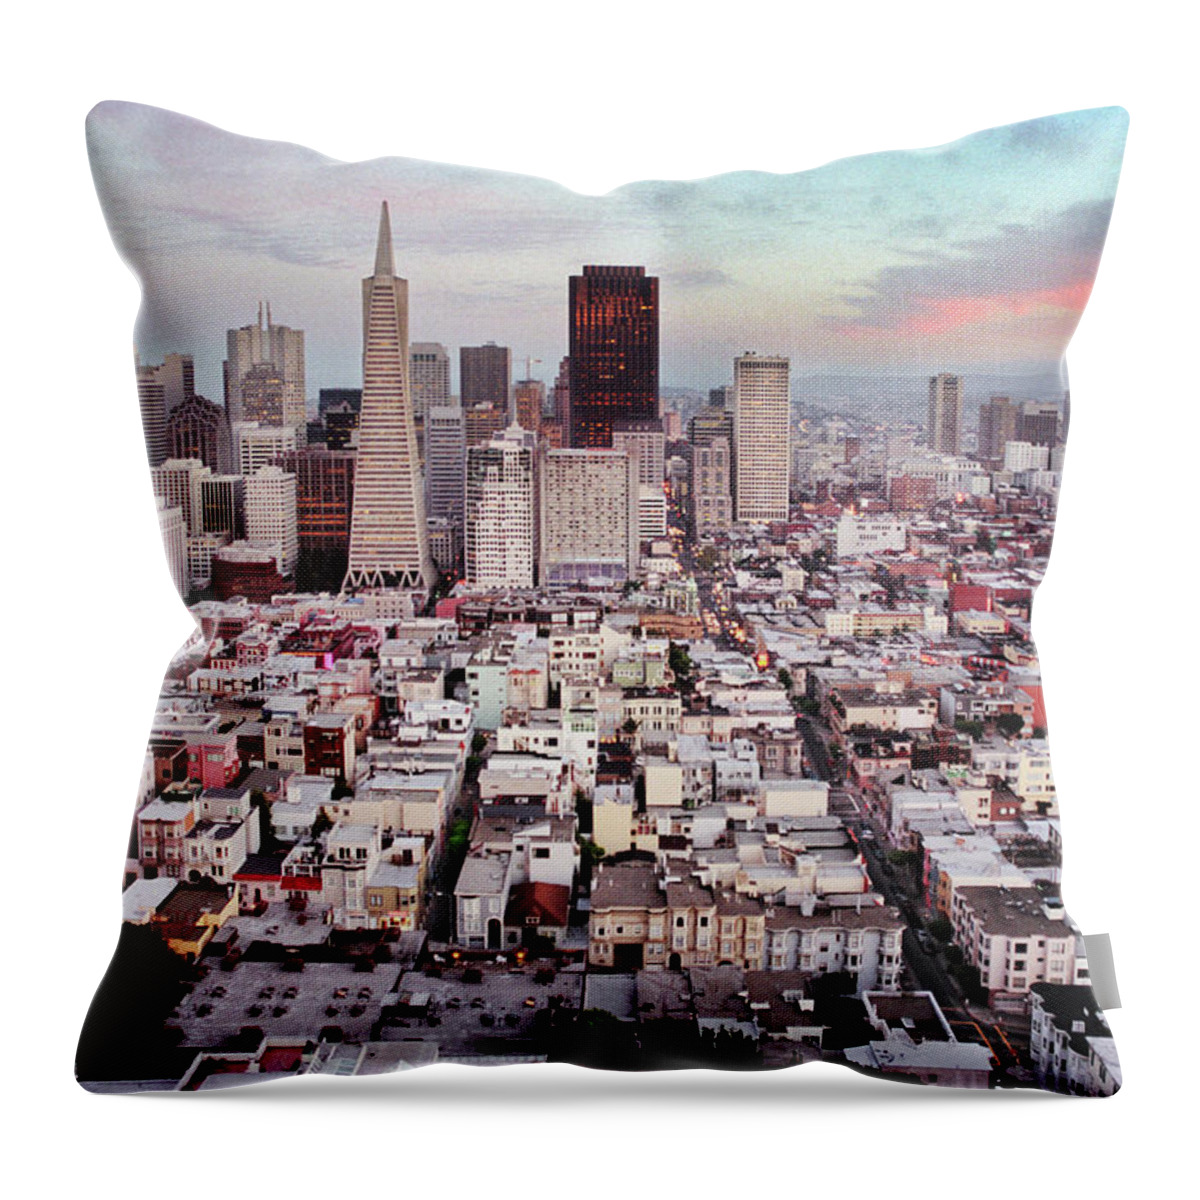 San Francisco Throw Pillow featuring the photograph San Francisco Aerial Skyline by Ryan Mcginnis